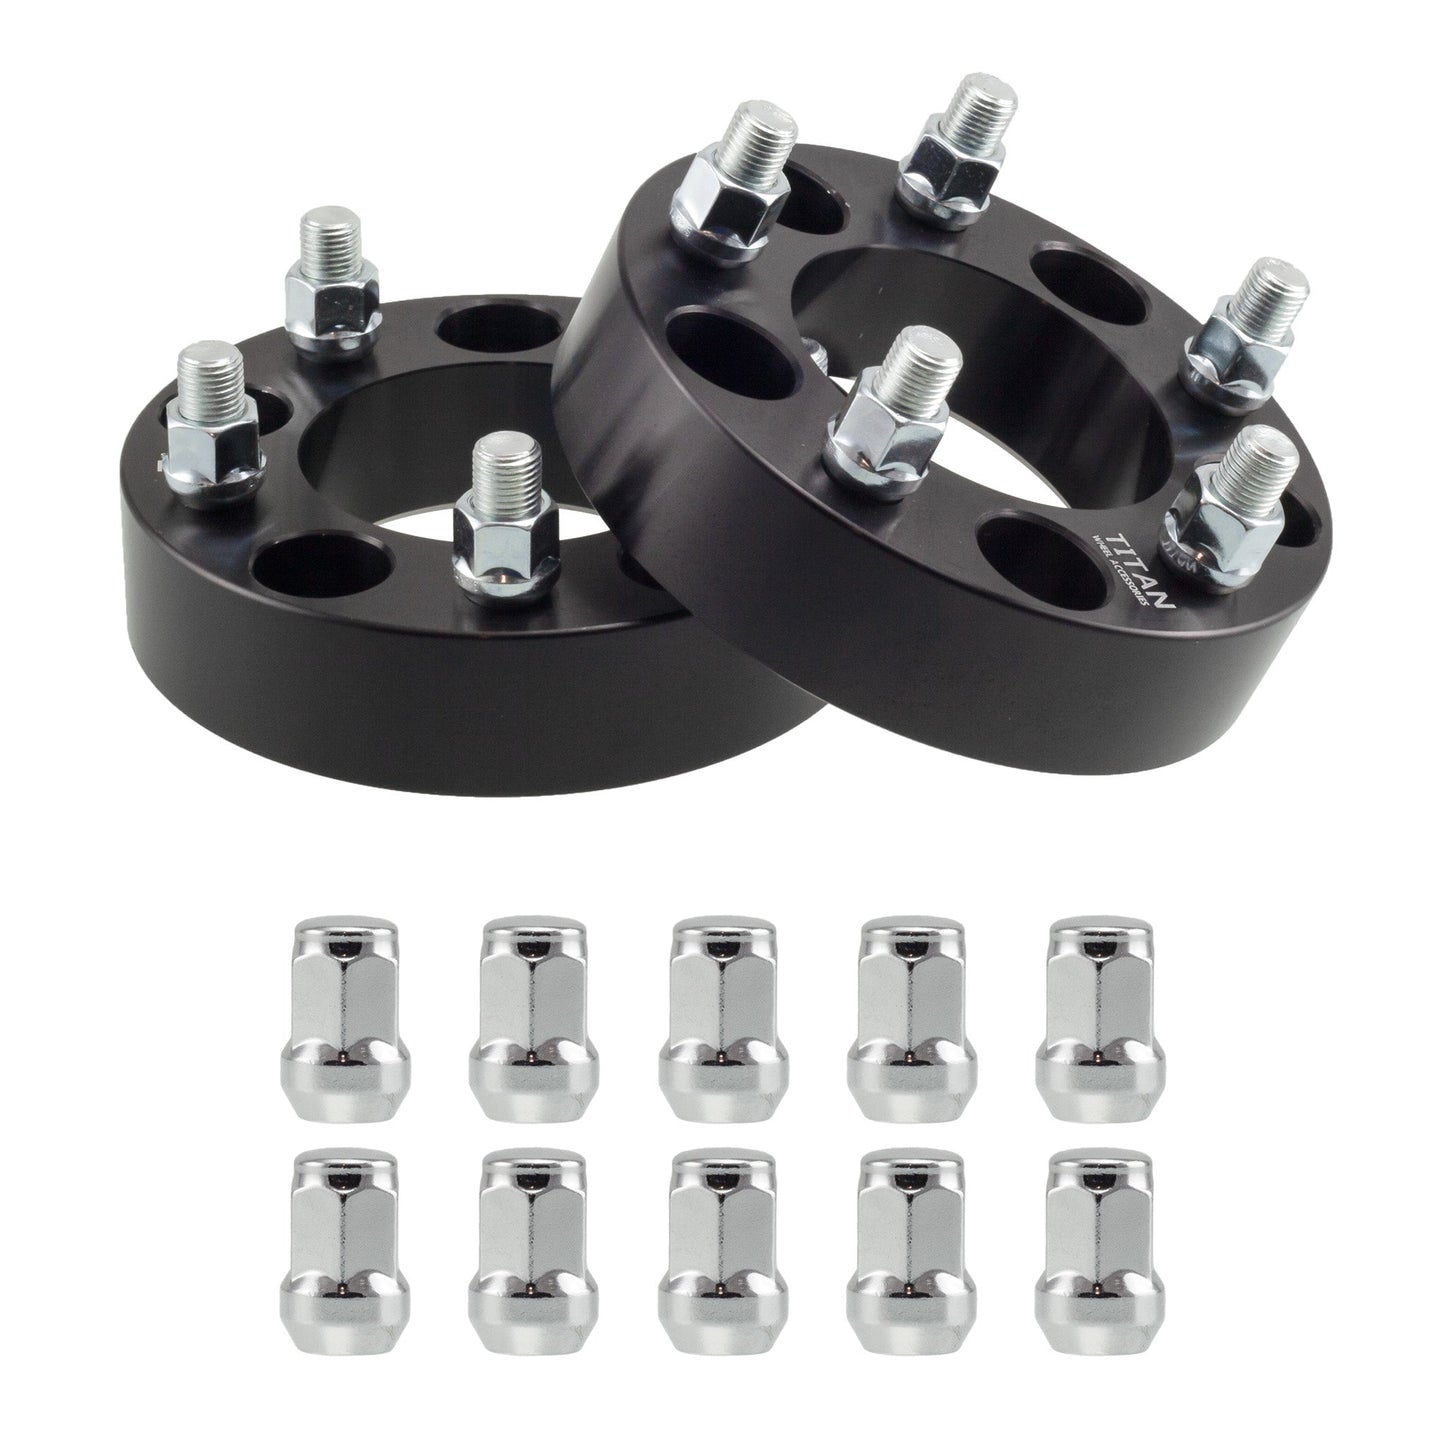 32mm (1.25") Titan Wheel Spacers for Toyota Camry MR2 Supra Lexus IS | 5x114.3 (5x4.5) | 60.1 Hubcentric |12x1.5 Studs | Titan Wheel Accessories